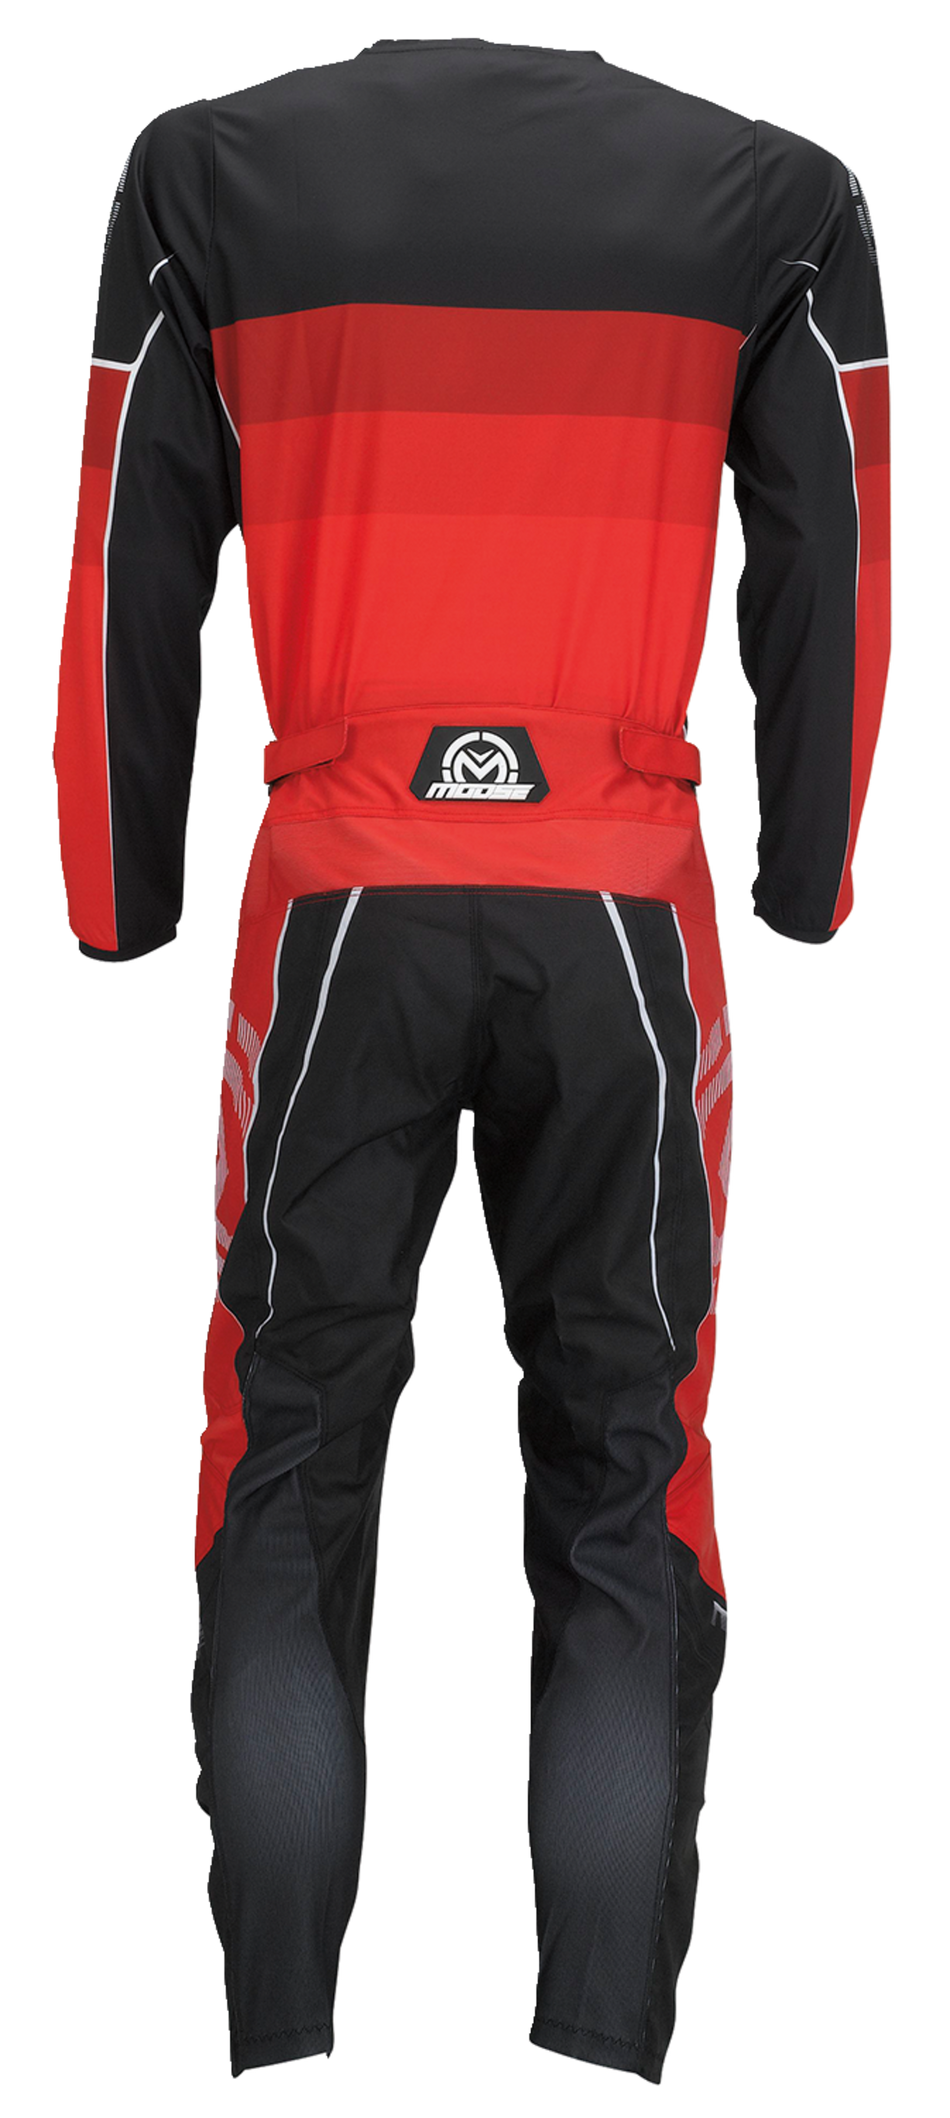 MOOSE RACING Qualifier® Jersey - Red/Black - 4XL 2910-7186